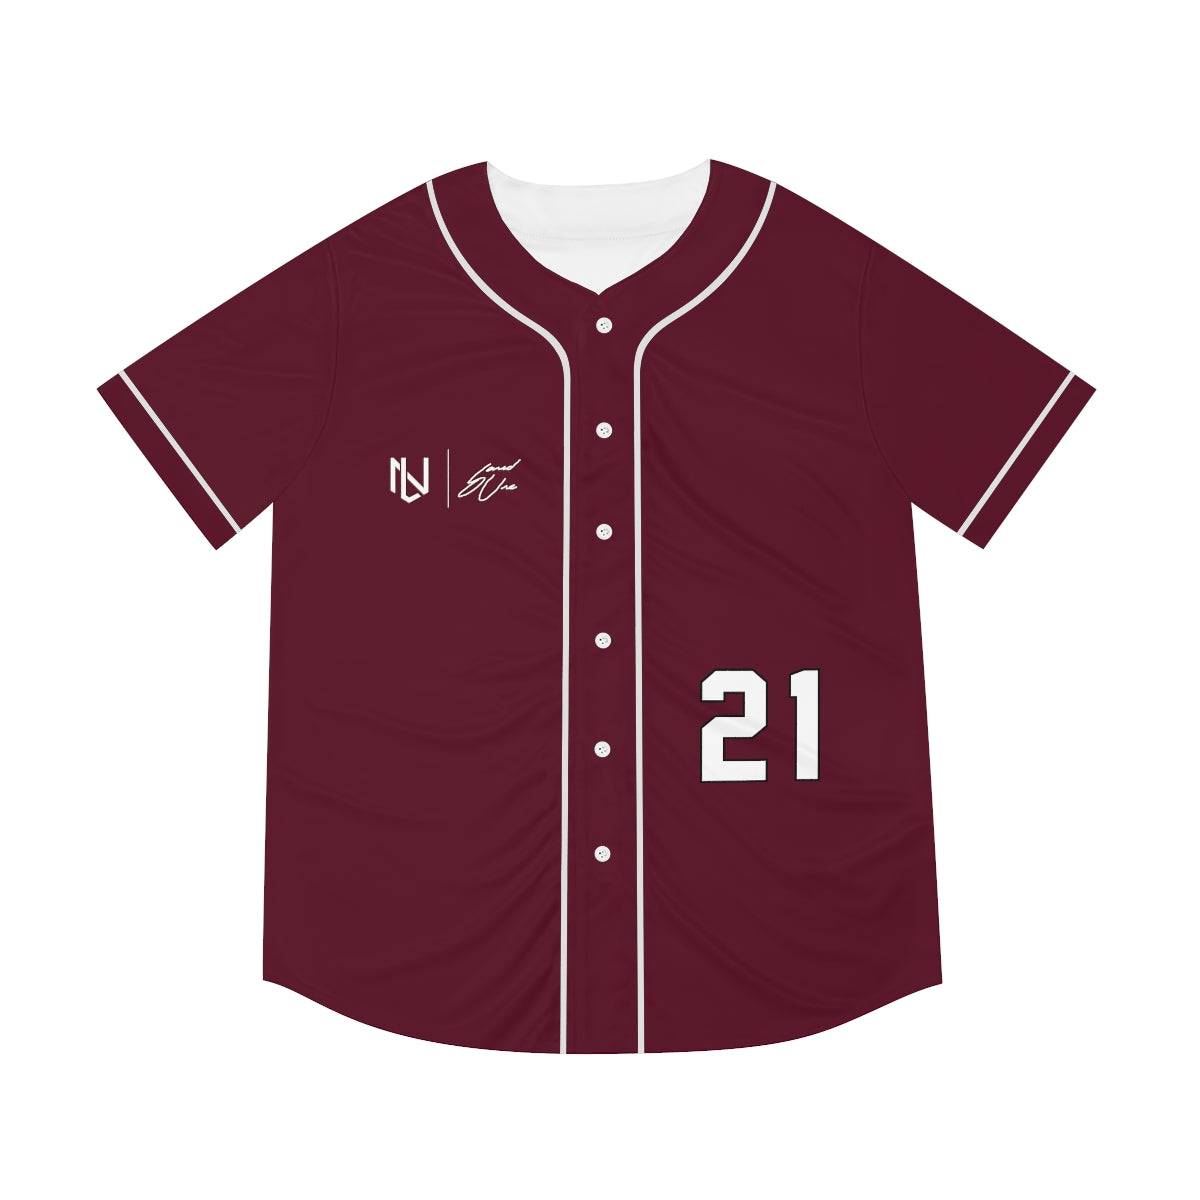 Corps Baseball Jersey - Maroon U